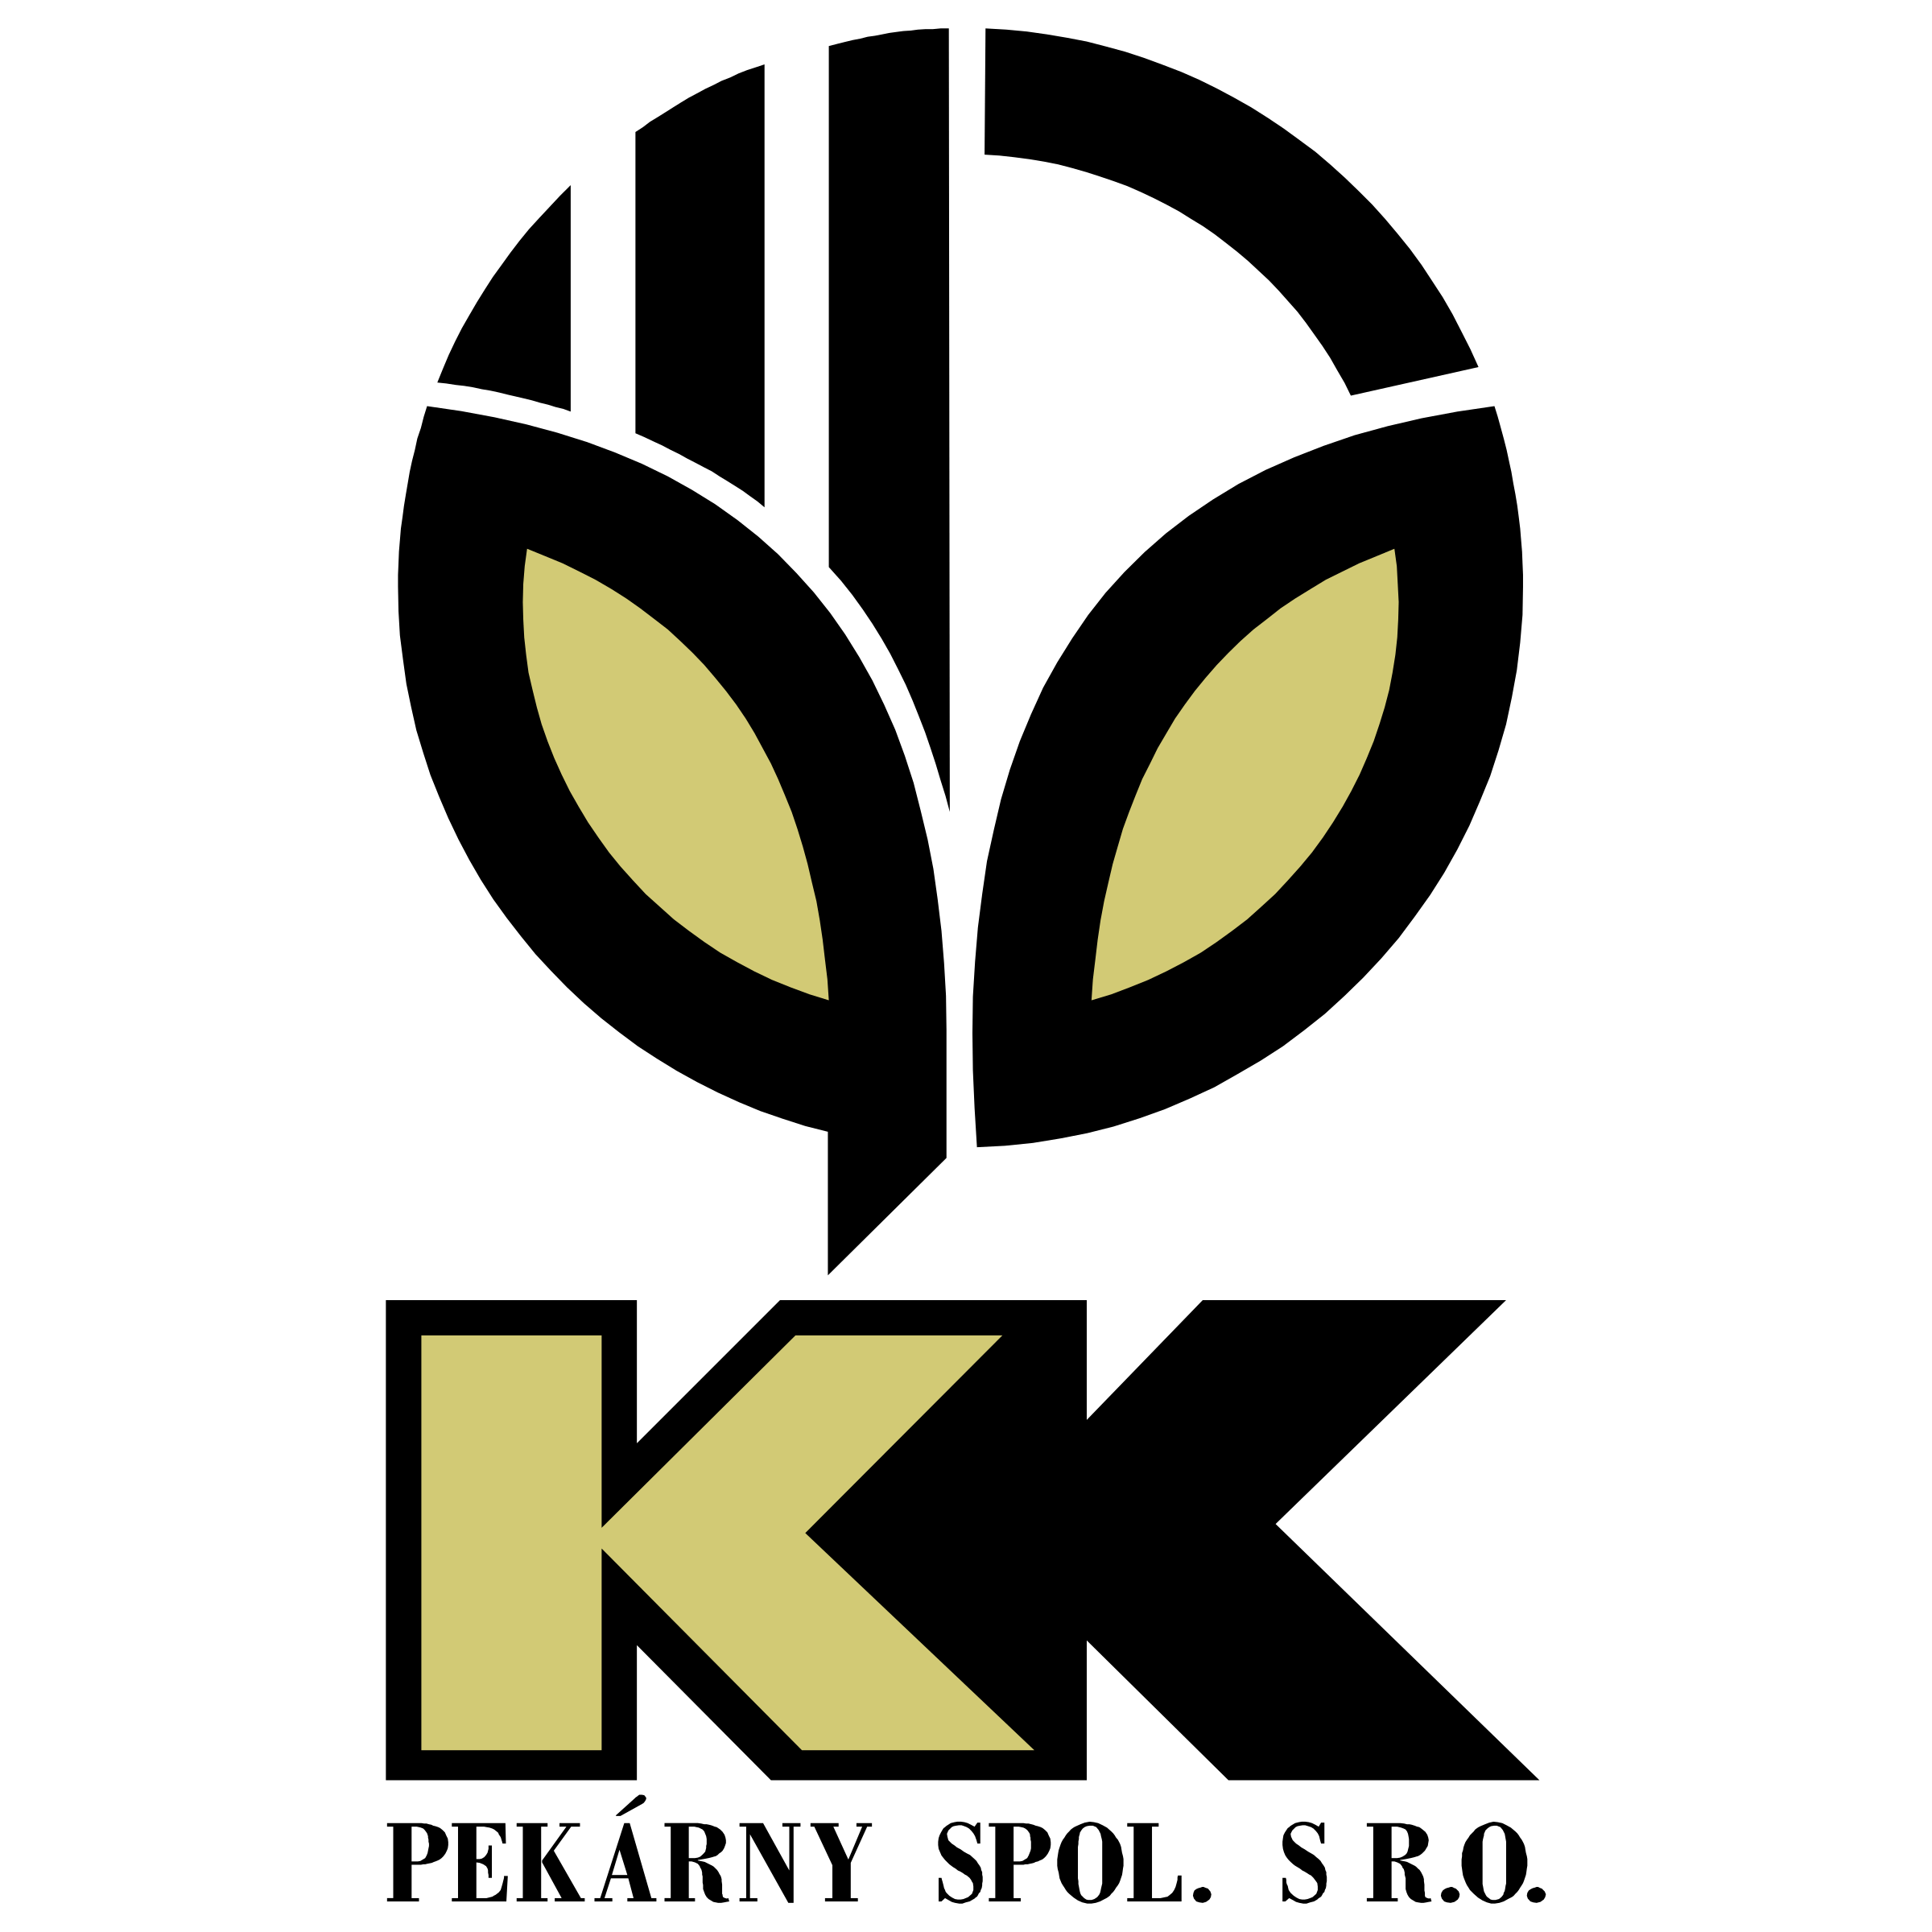 Kaixin001 Logo - K a K Pekarny Spol Logo PNG Transparent & SVG Vector - Freebie Supply